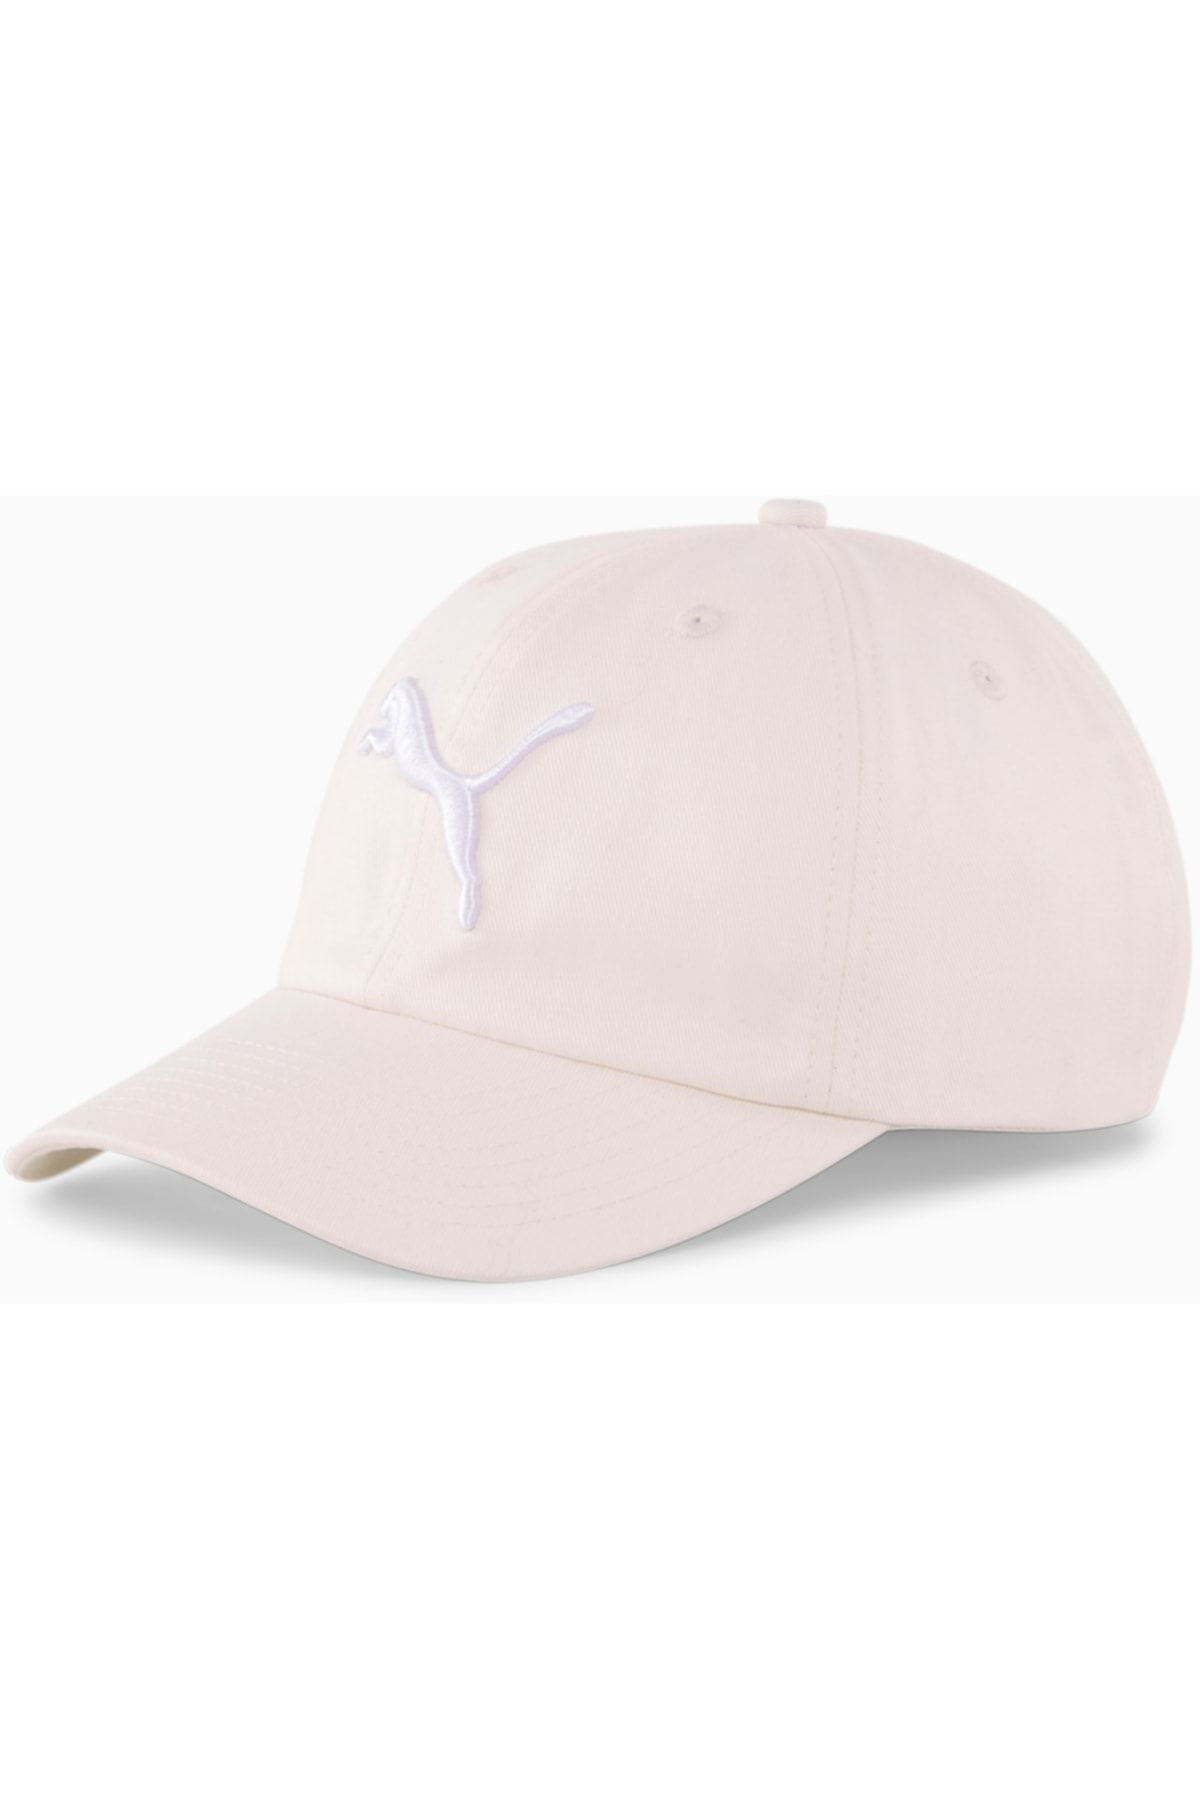 Puma Essentials Pristine Beyaz Şapka